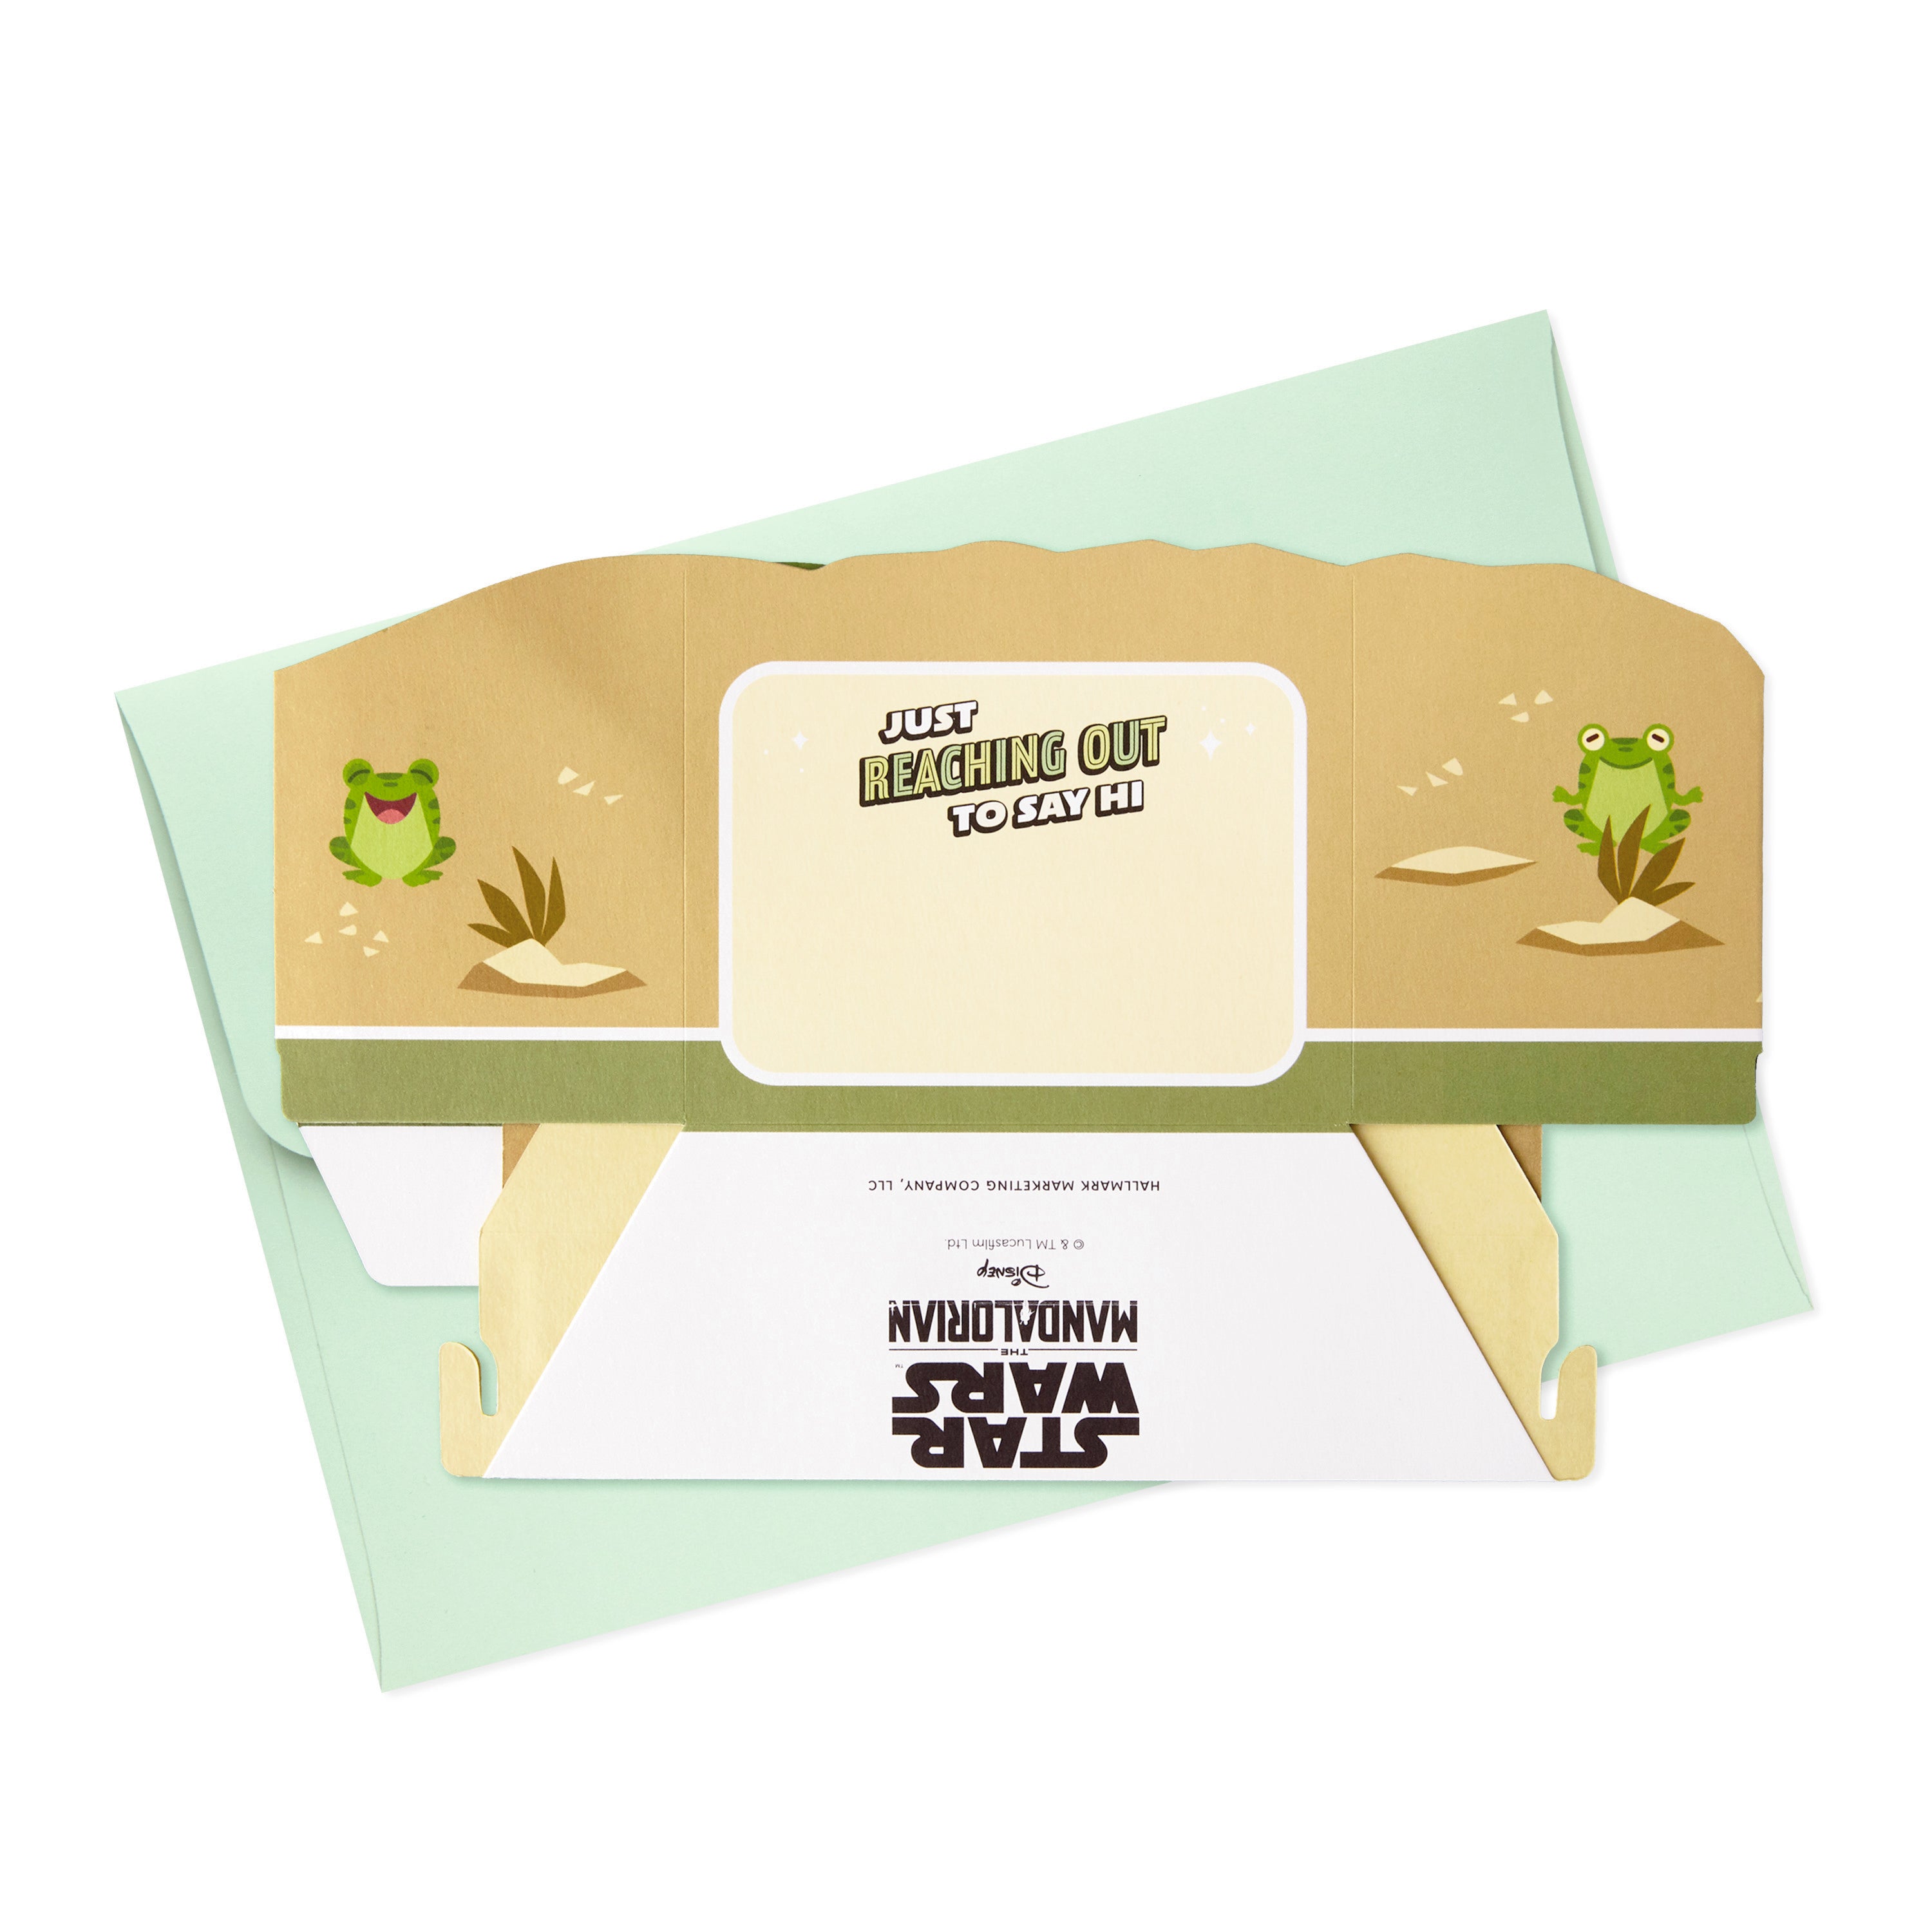 Paper Wonder Star Wars Baby Yoda Pop Up Card (Reaching Out)